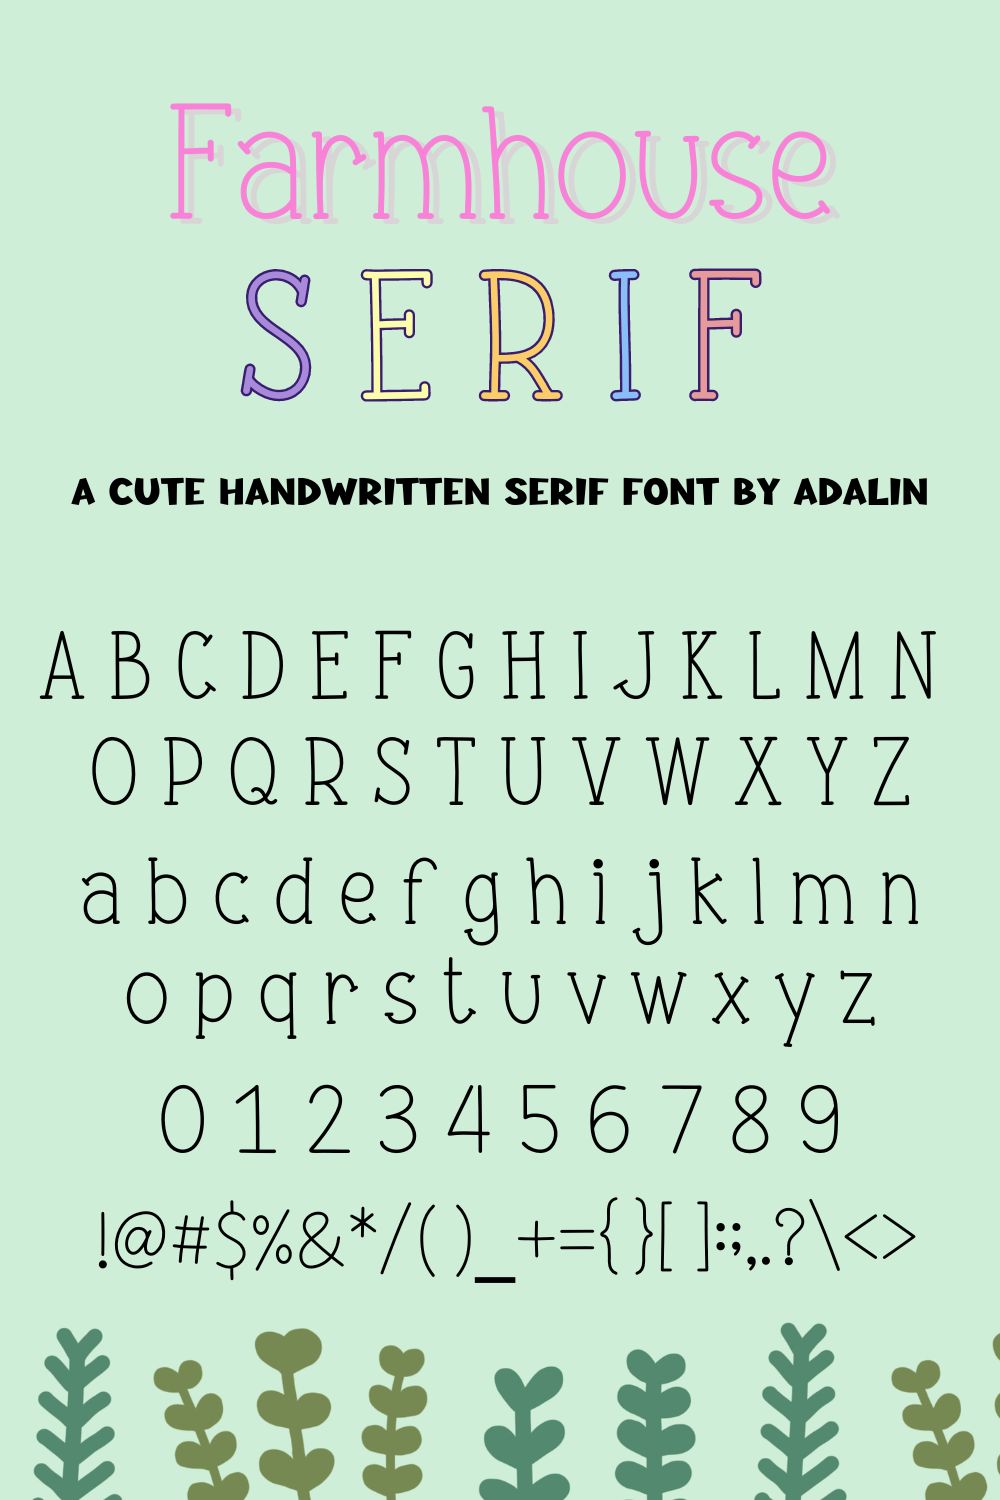 Farmhouse Serif Font pinterest preview image.